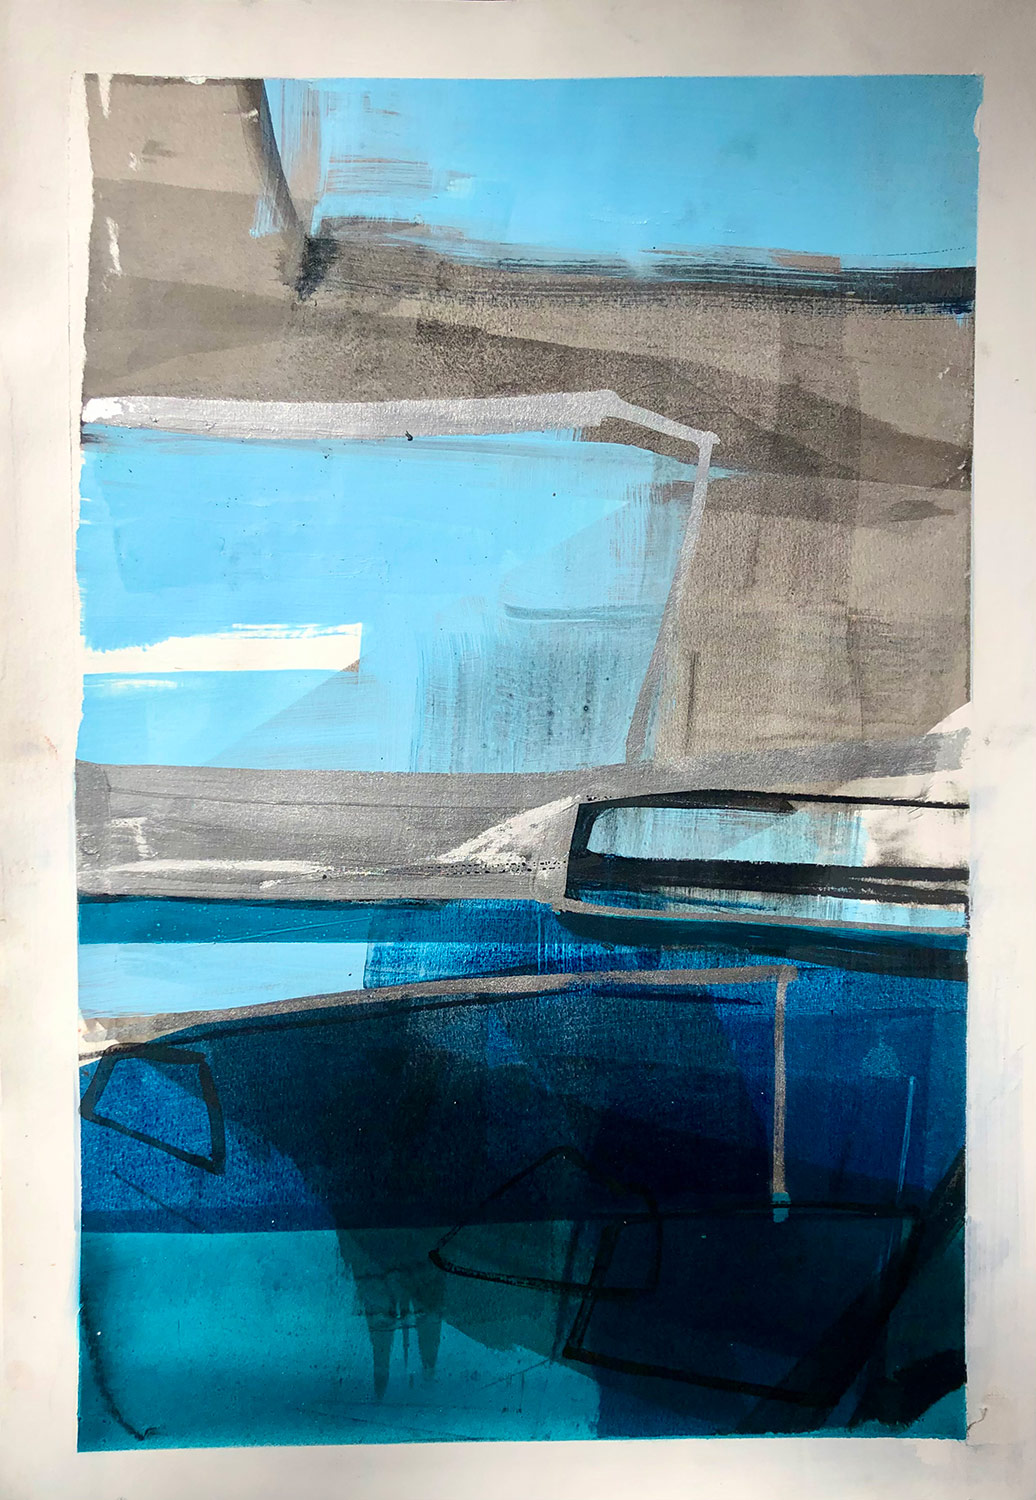 Anthony-Garratt-Blue-on-blue-study-40x29cm-mixed-media-on-paper